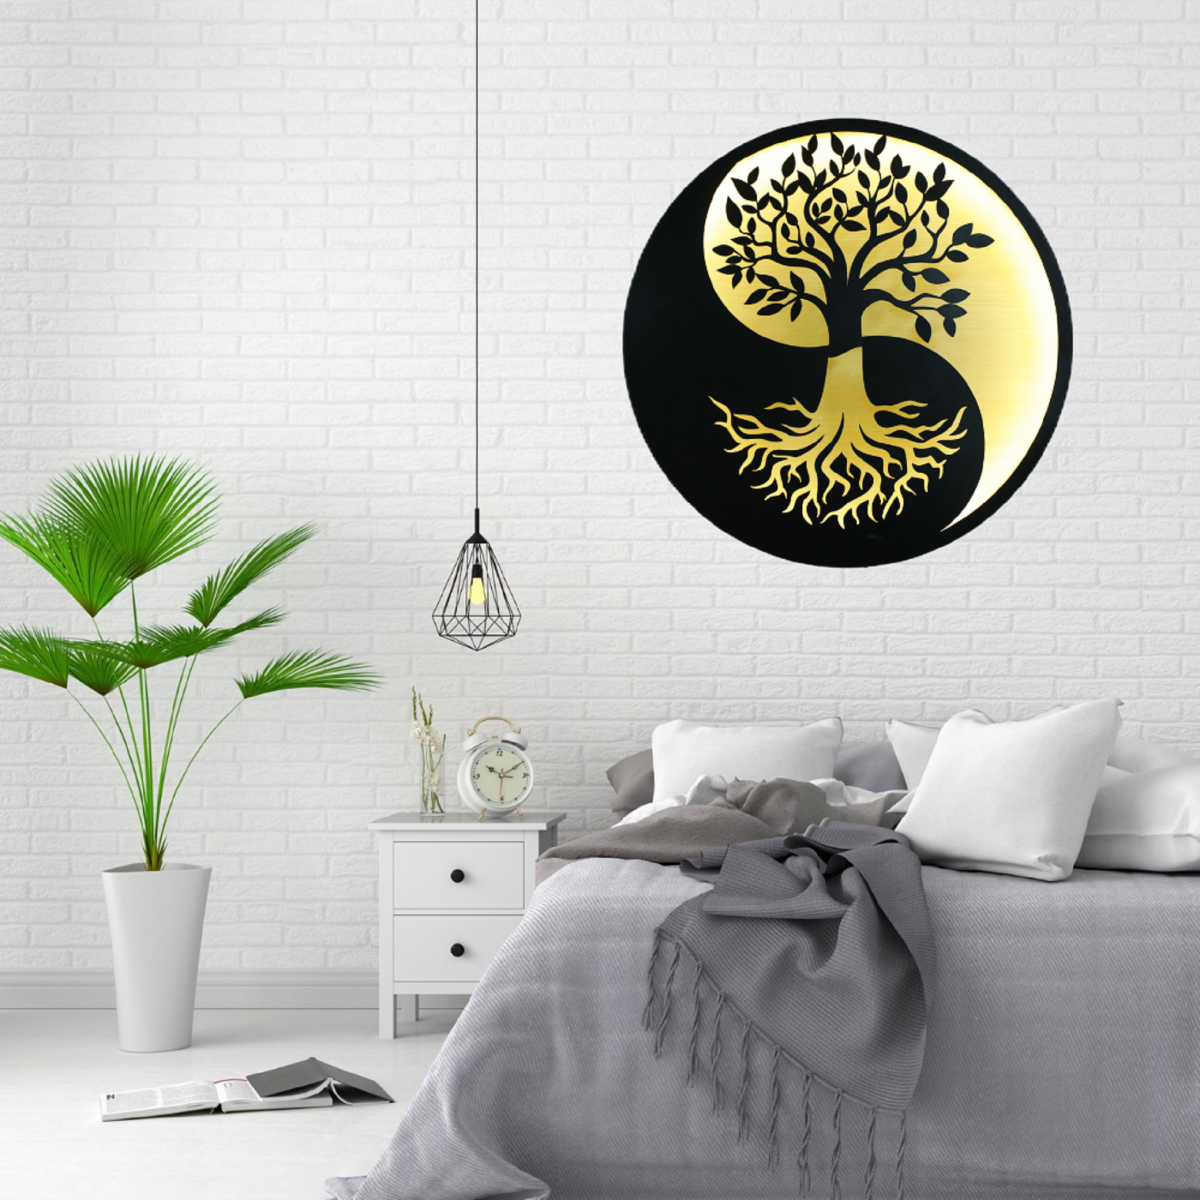 Yin Yang Tree - A Beautiful Symbol of Balance and Harmony in Nature